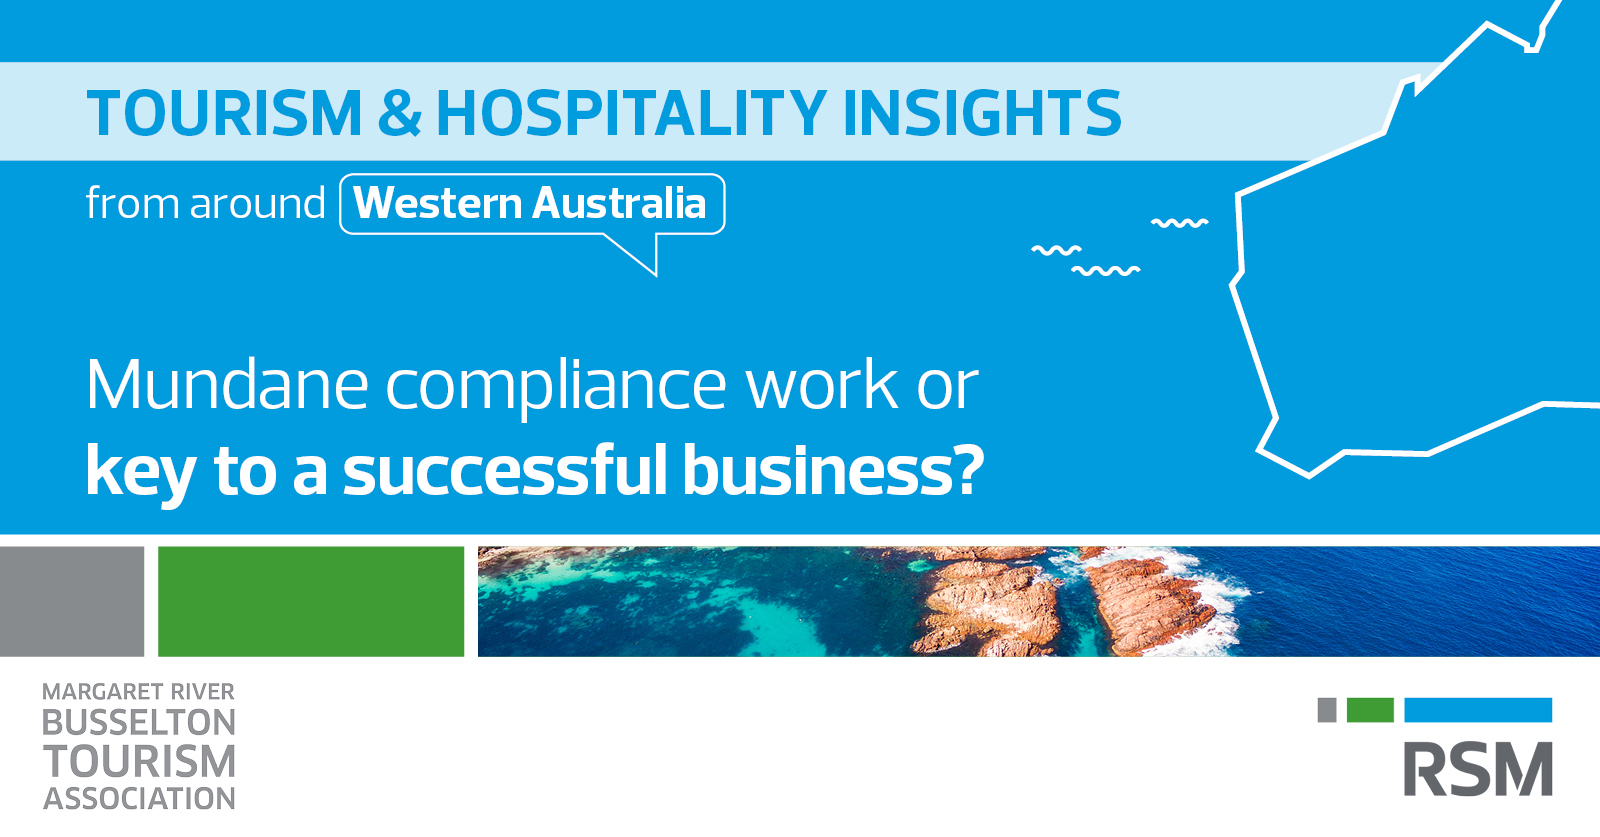 RSM Australia: Mundane compliance work, or key to a successful business?